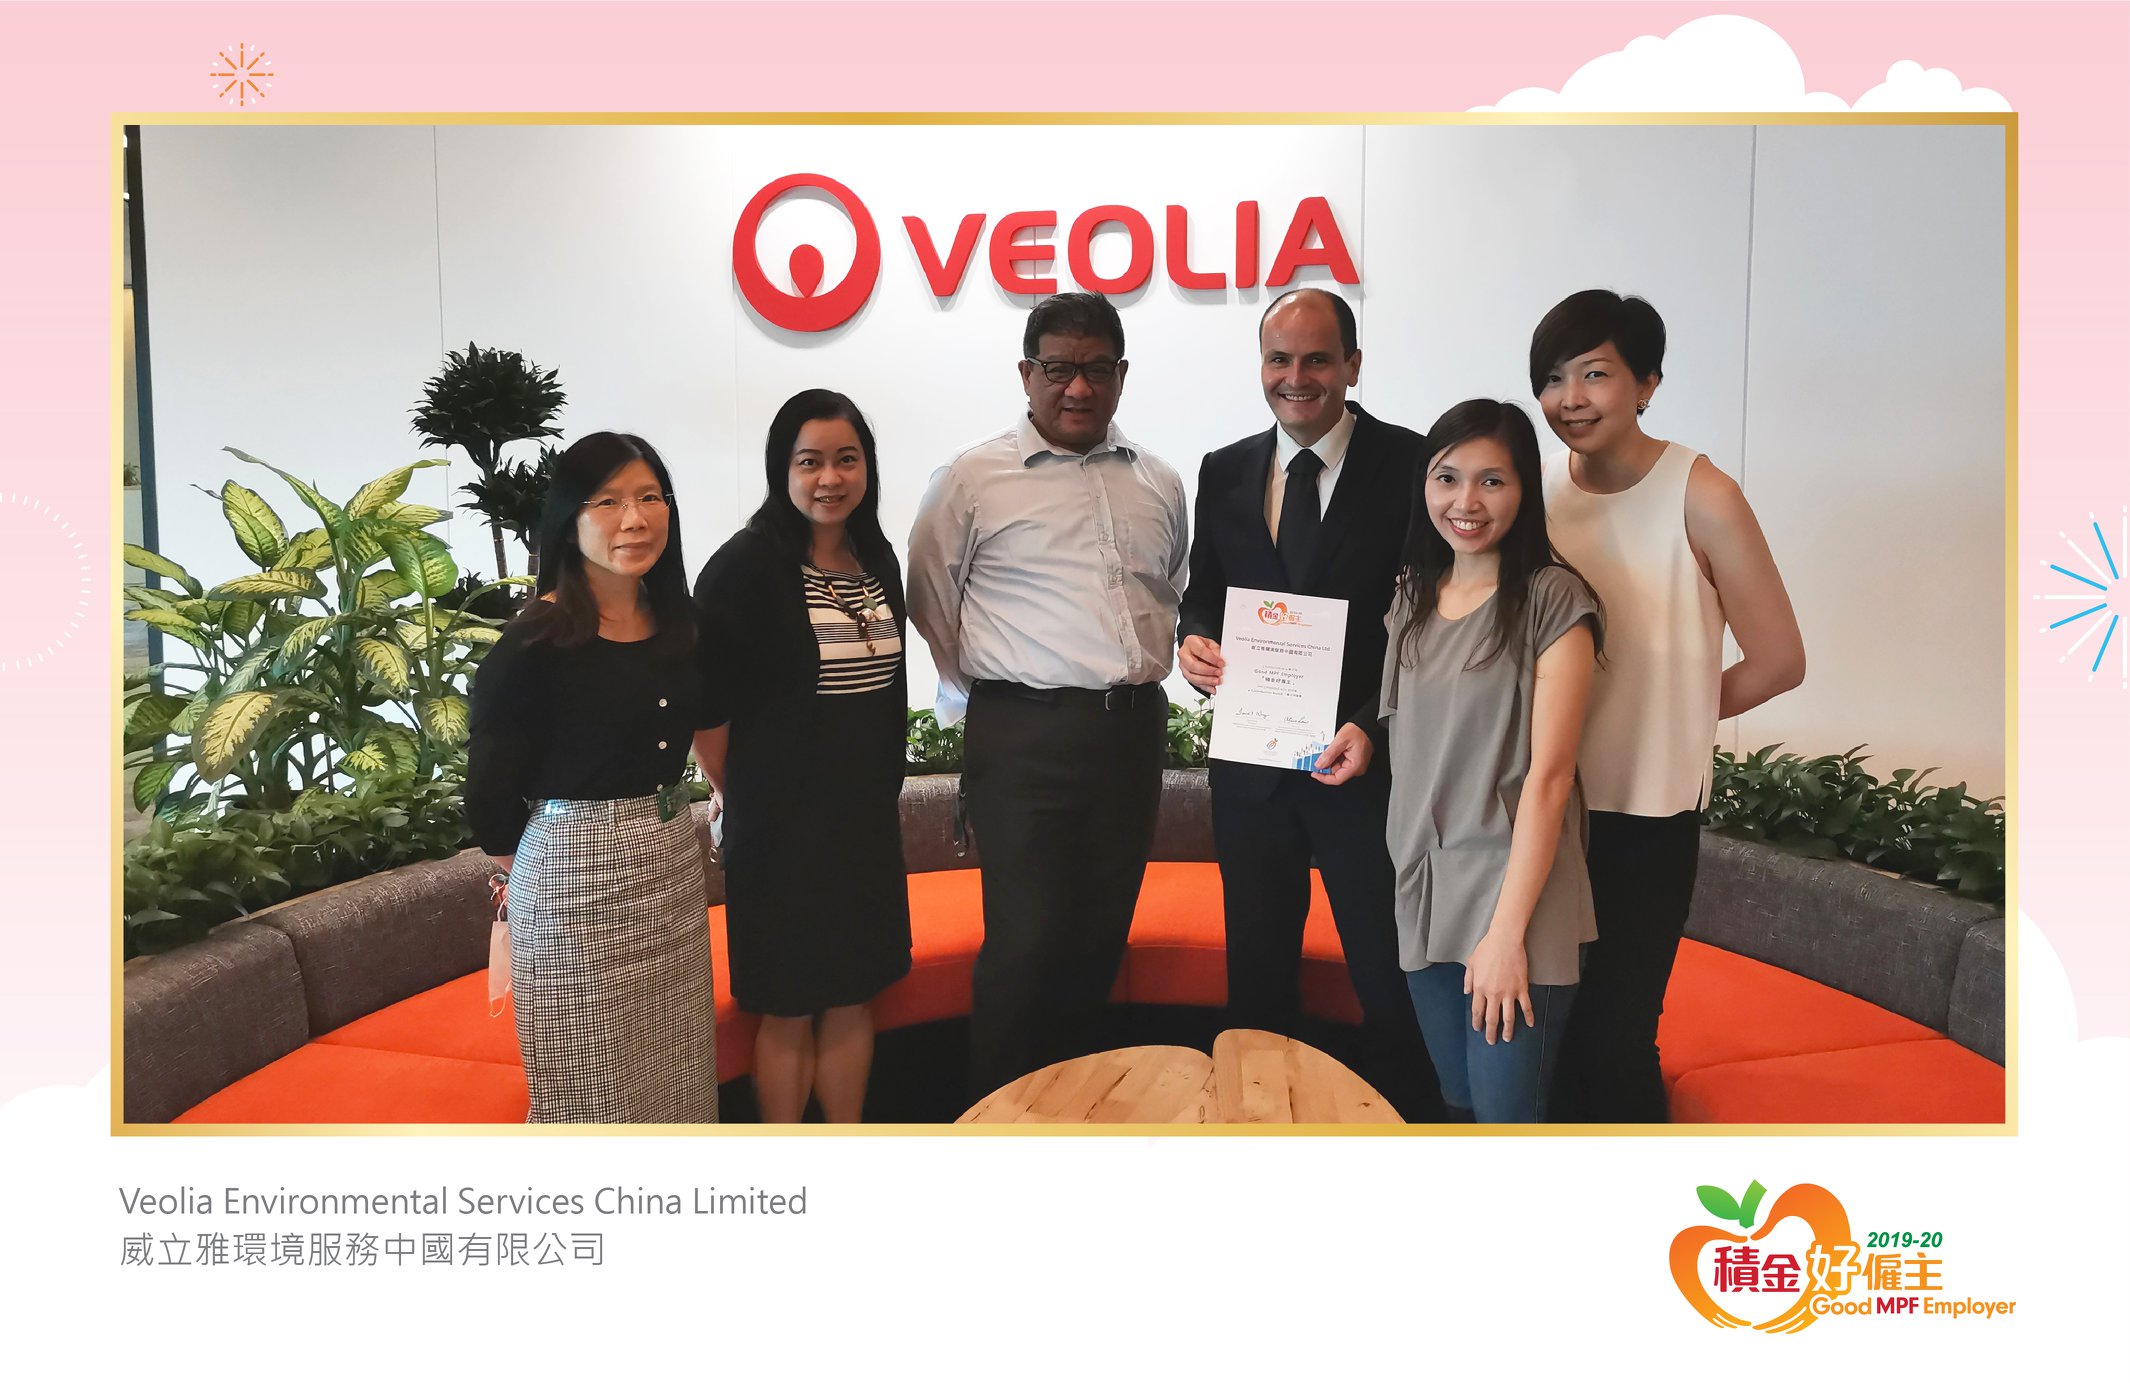 Veolia Environmental Services China Limited 威立雅環境服務中國有限公司